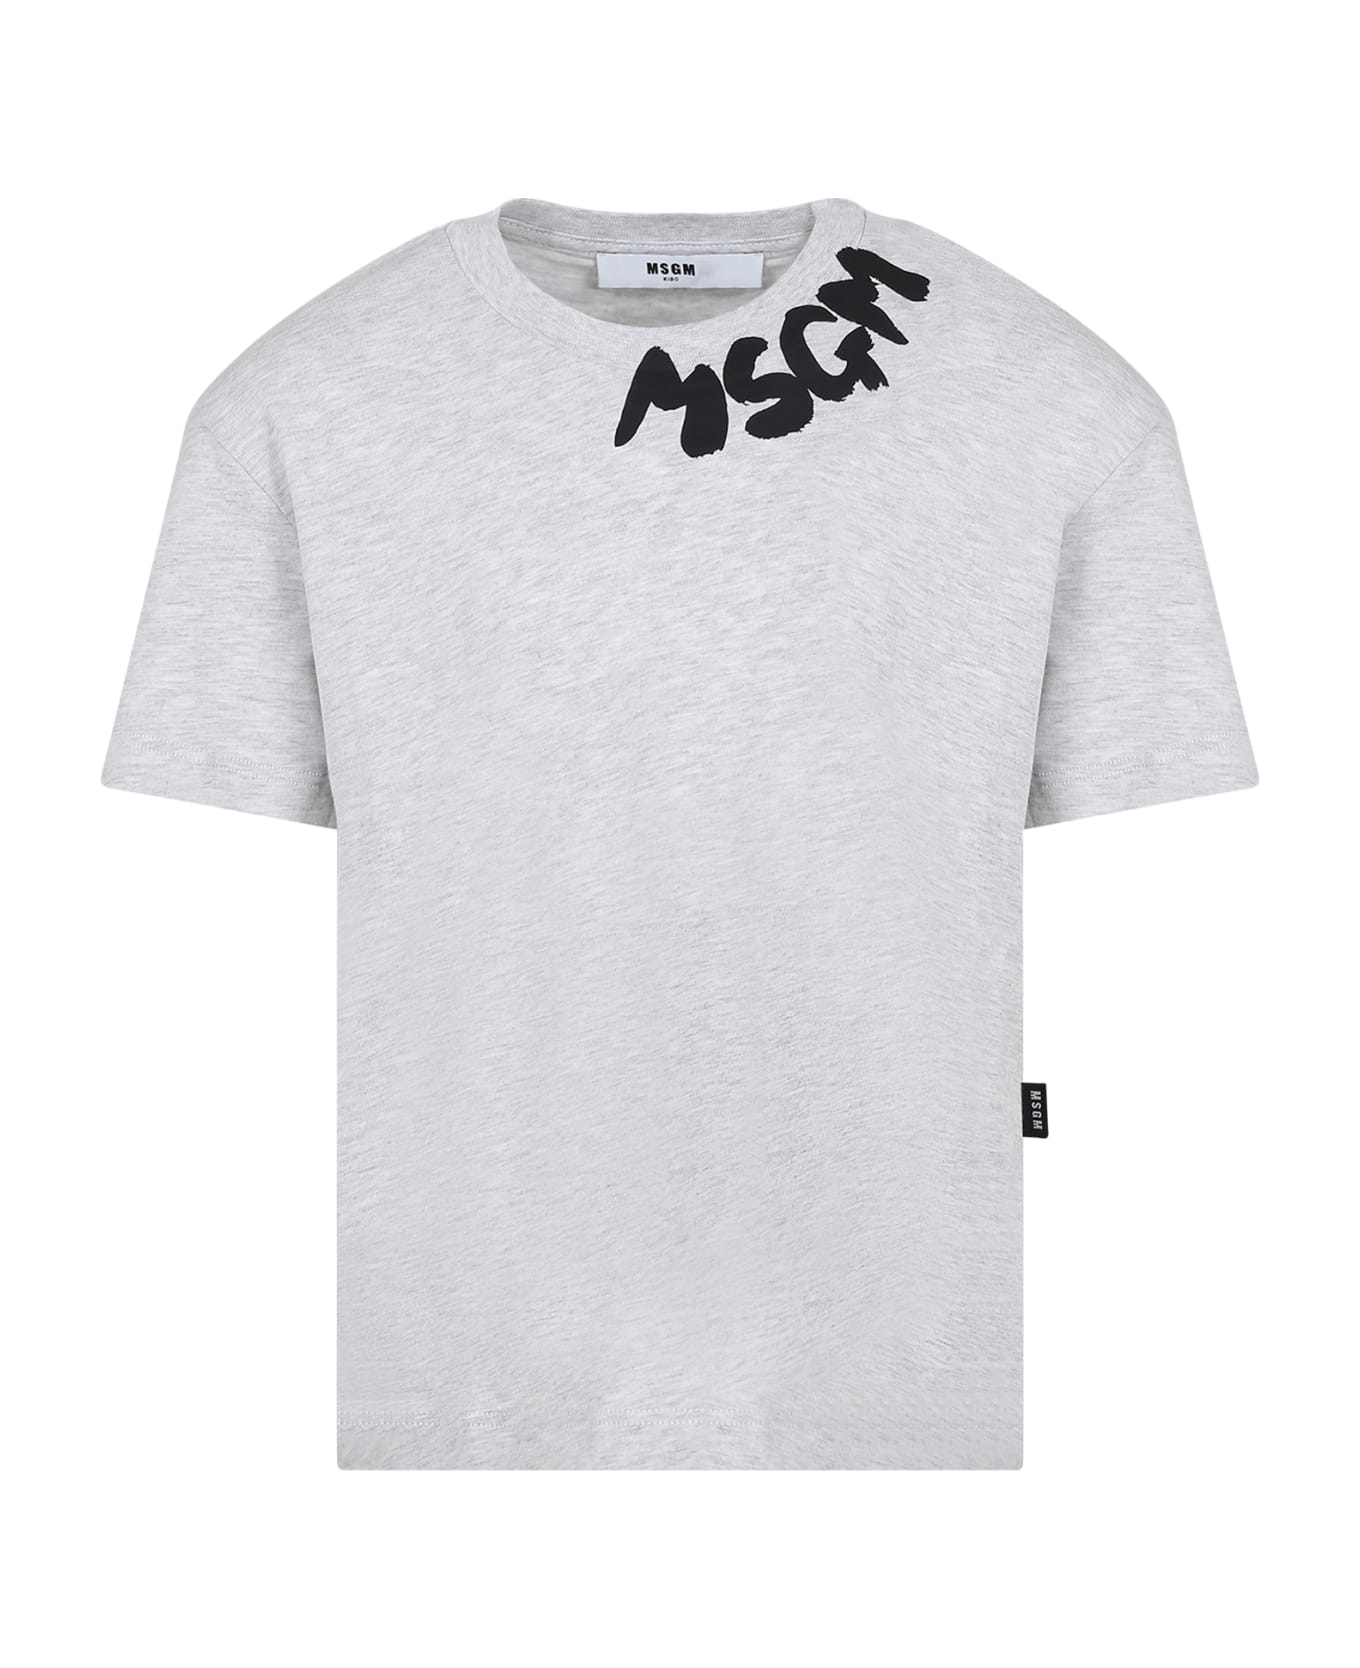 MSGM Grey Sweatshirt For Kids With Logo - Grigio melange